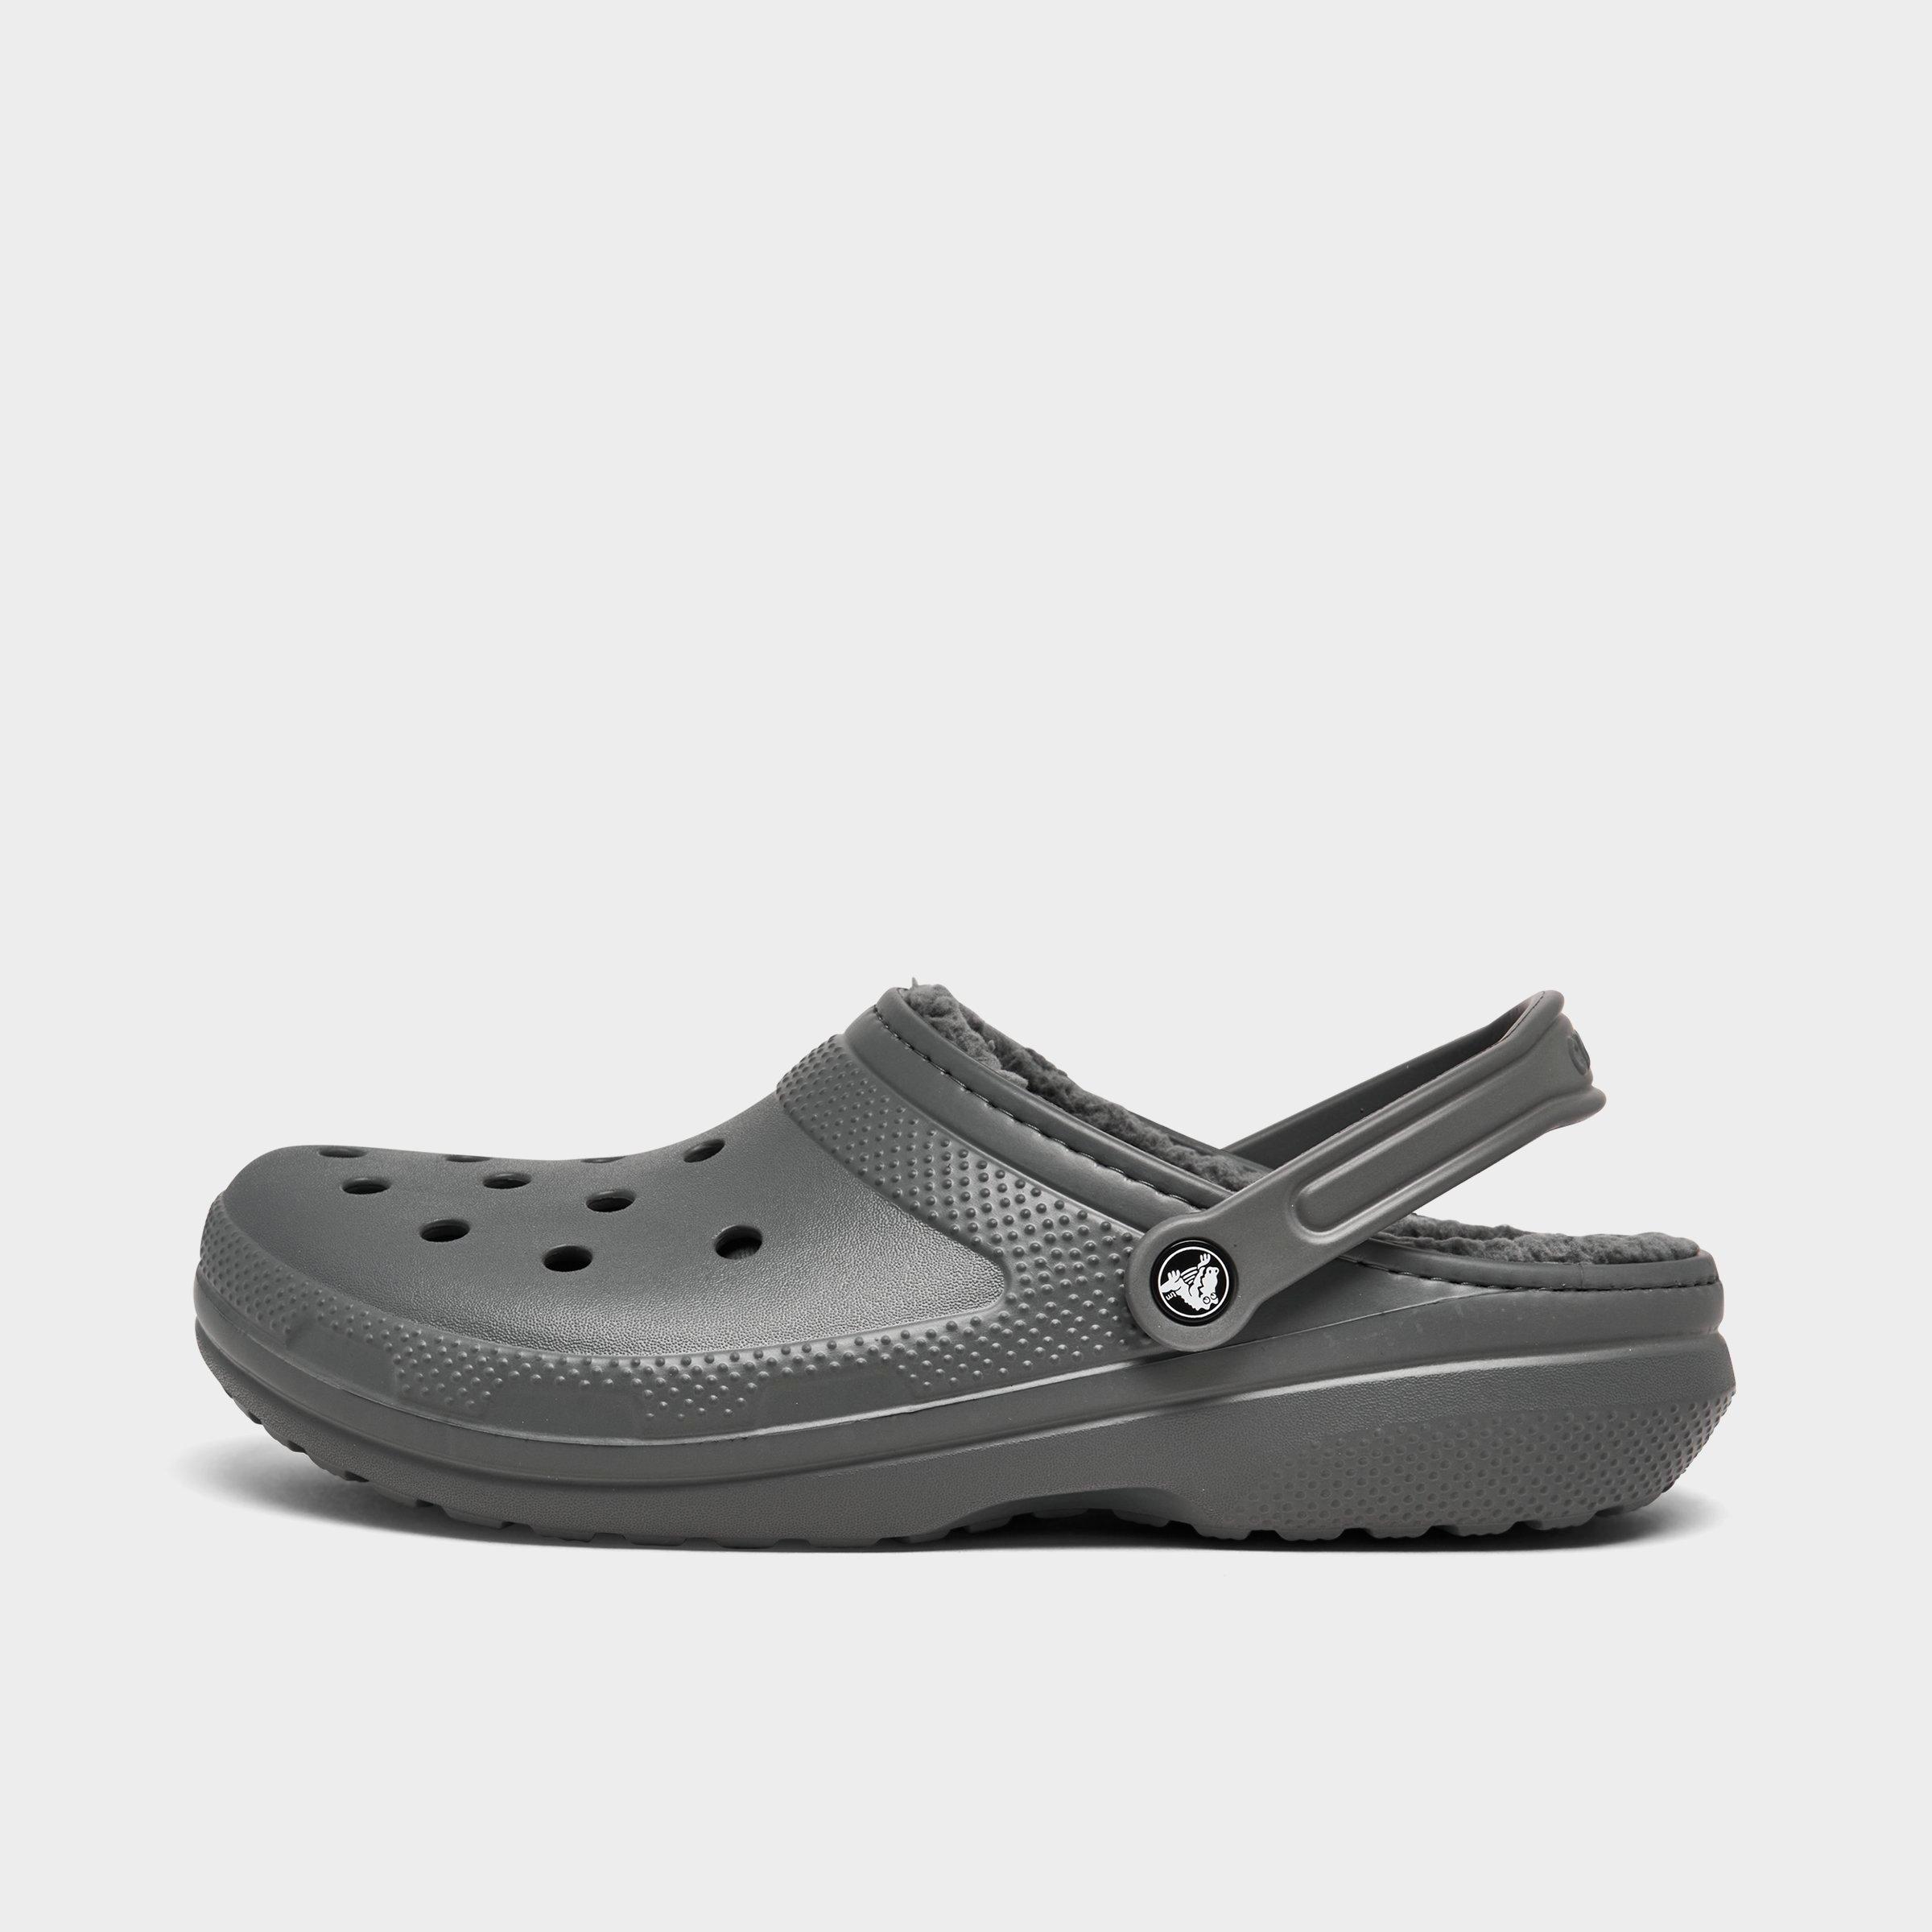 crocs on line shopping